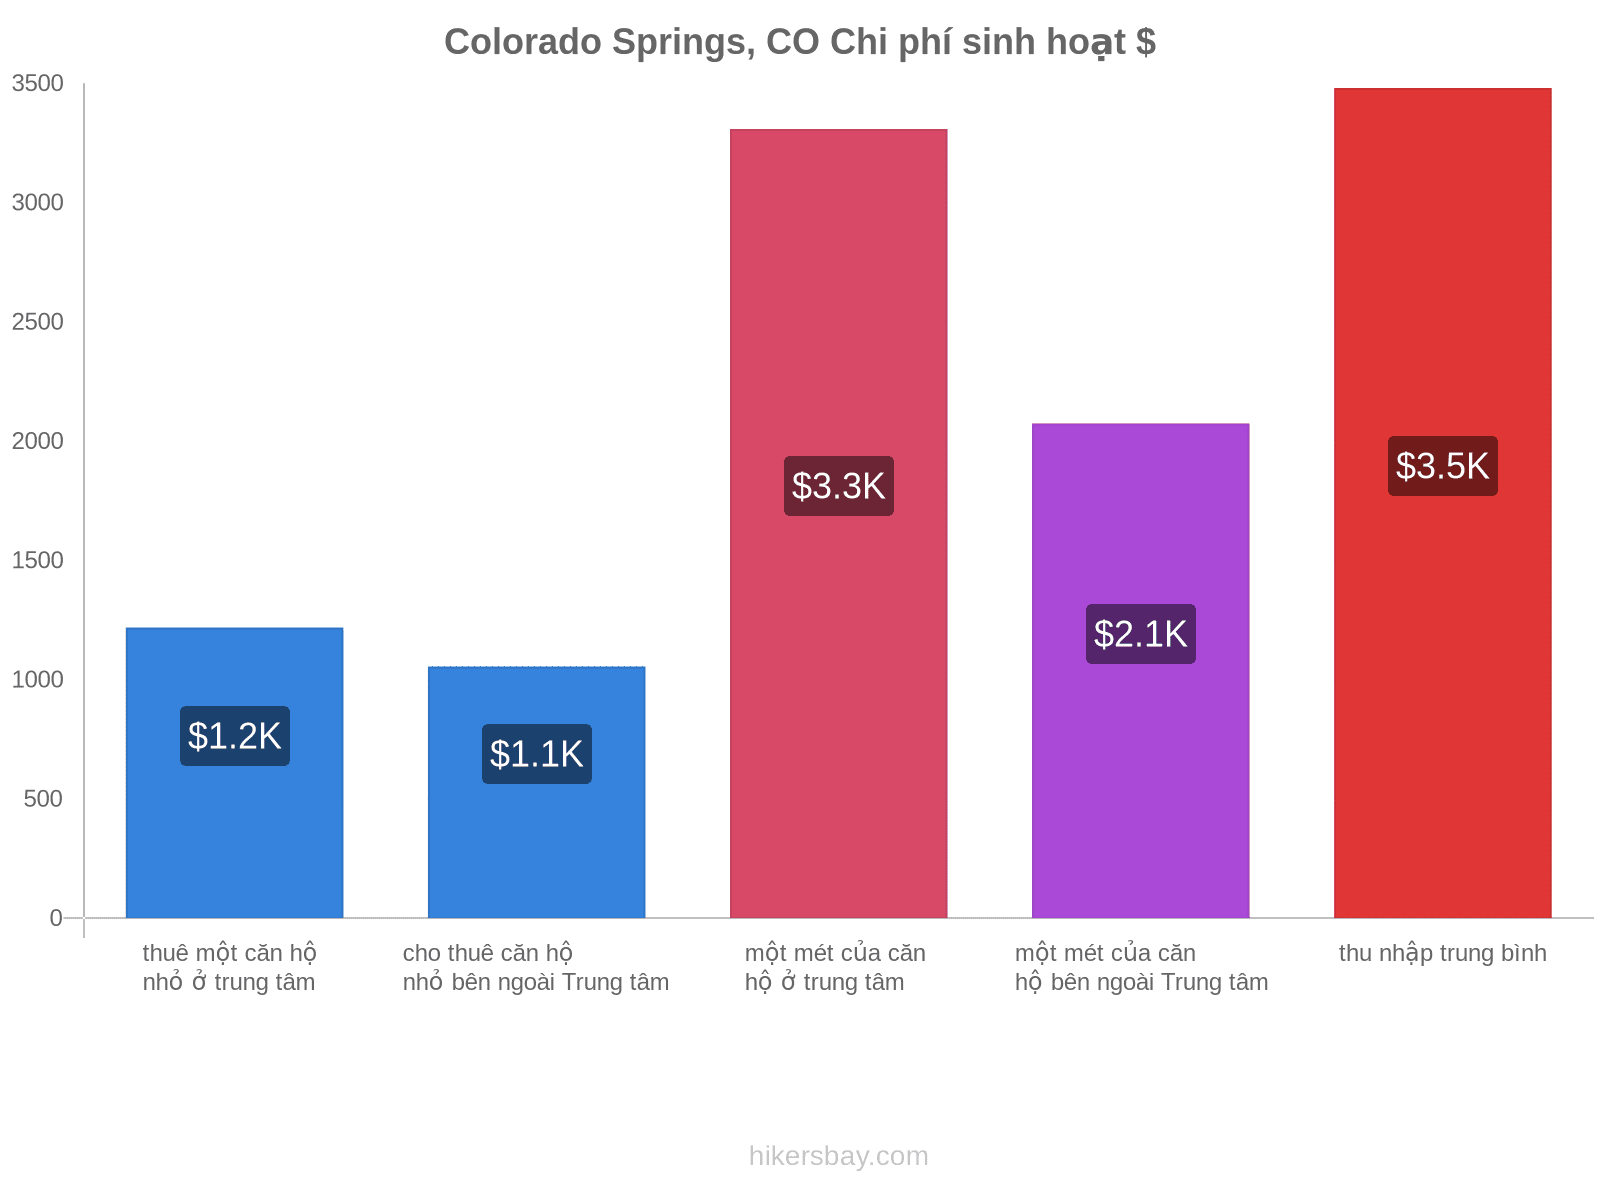 Colorado Springs, CO chi phí sinh hoạt hikersbay.com